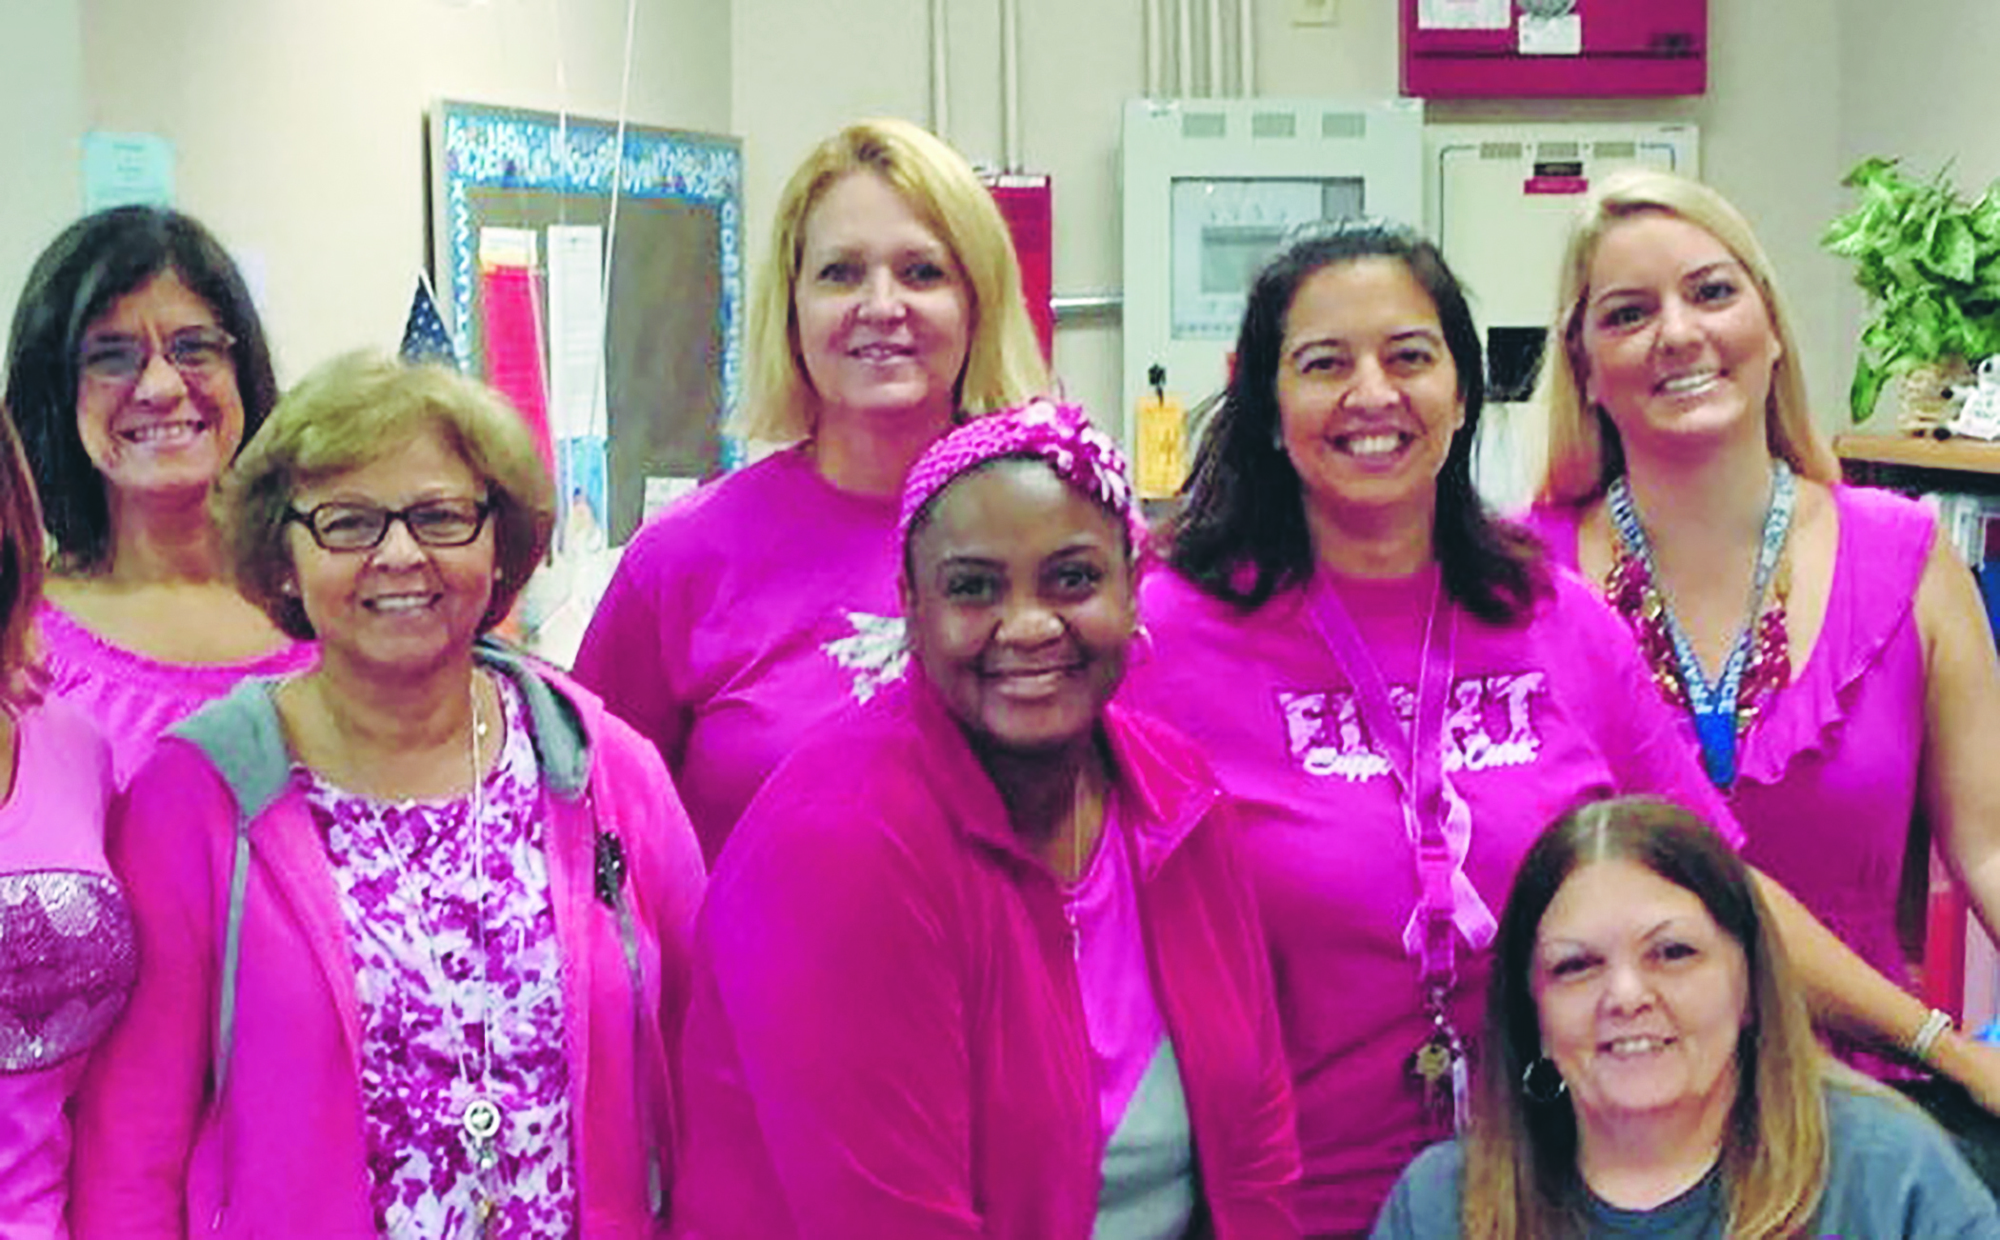 Many of Gail Kiehm’s colleagues at Frangus Elementary participated in Pinktober: front, Hilda Oliveras, nurse Rhonda Madison and Kiehm; back, Ann Cherolini, Connie Ryczek, Liana Hulcher and Michelle Friedman.